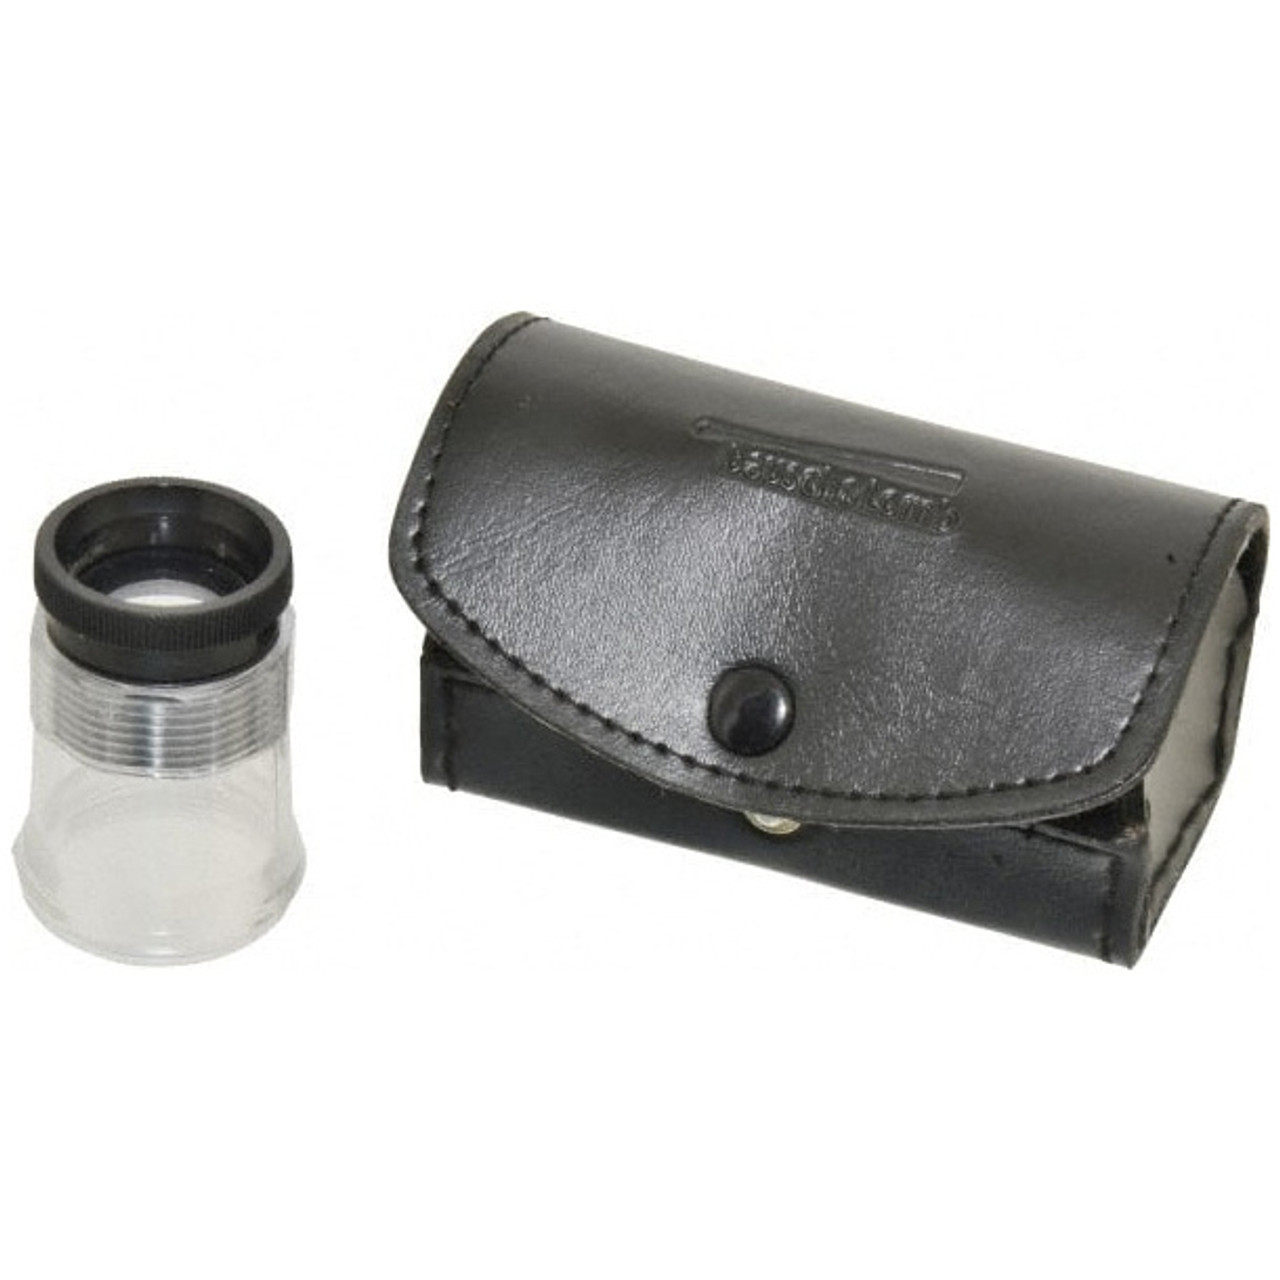 SE Mf2054b 5X Folding Pocket Magnifier with 1-1/2 Glass Lens Diameter